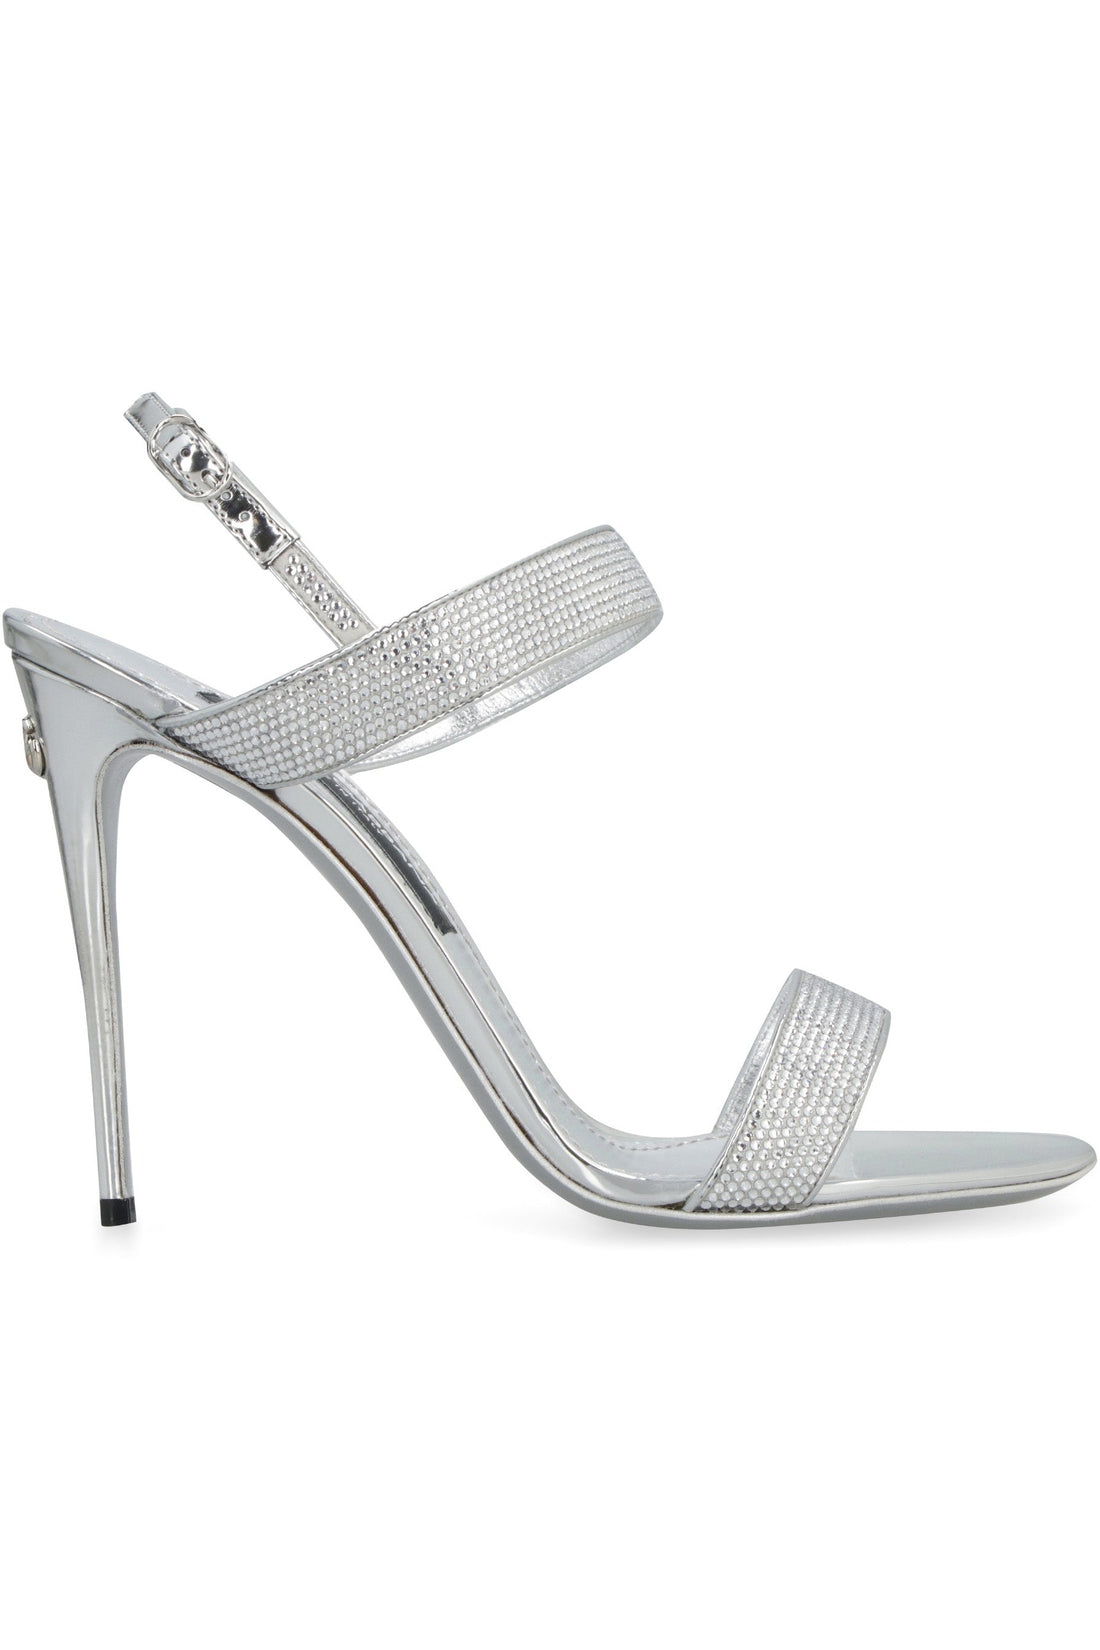 Dolce & Gabbana-OUTLET-SALE-KIM DOLCE&GABBANA - Keira metallic leather sandals-ARCHIVIST